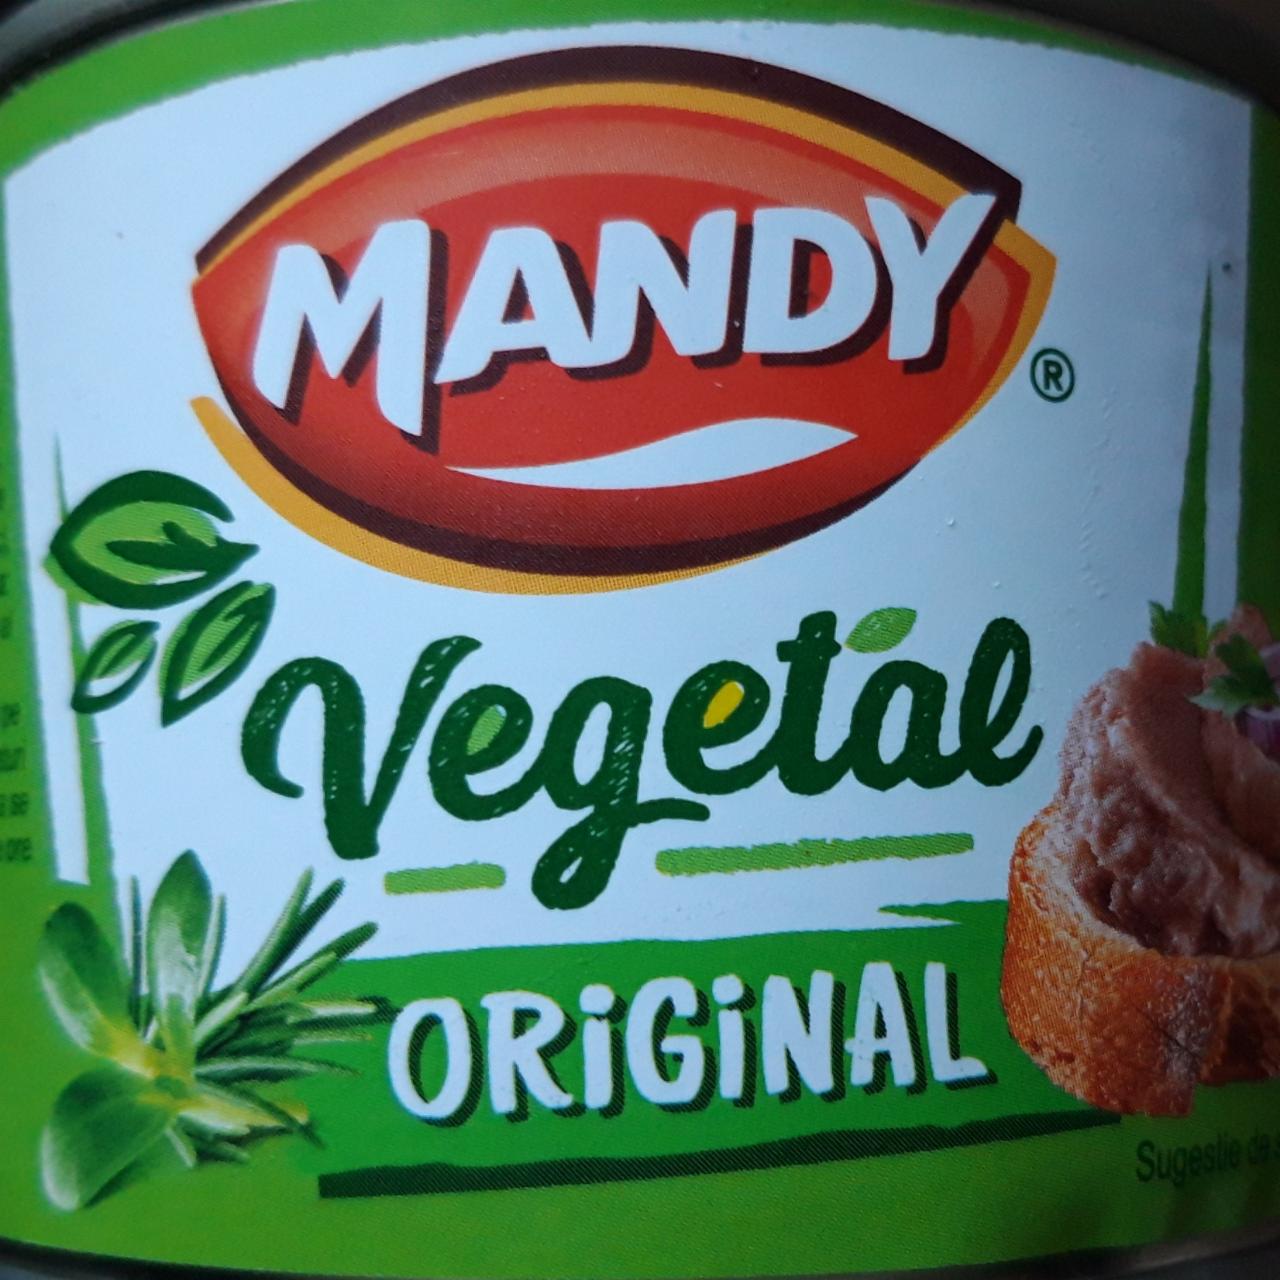 Képek - Vegetal original Mandy